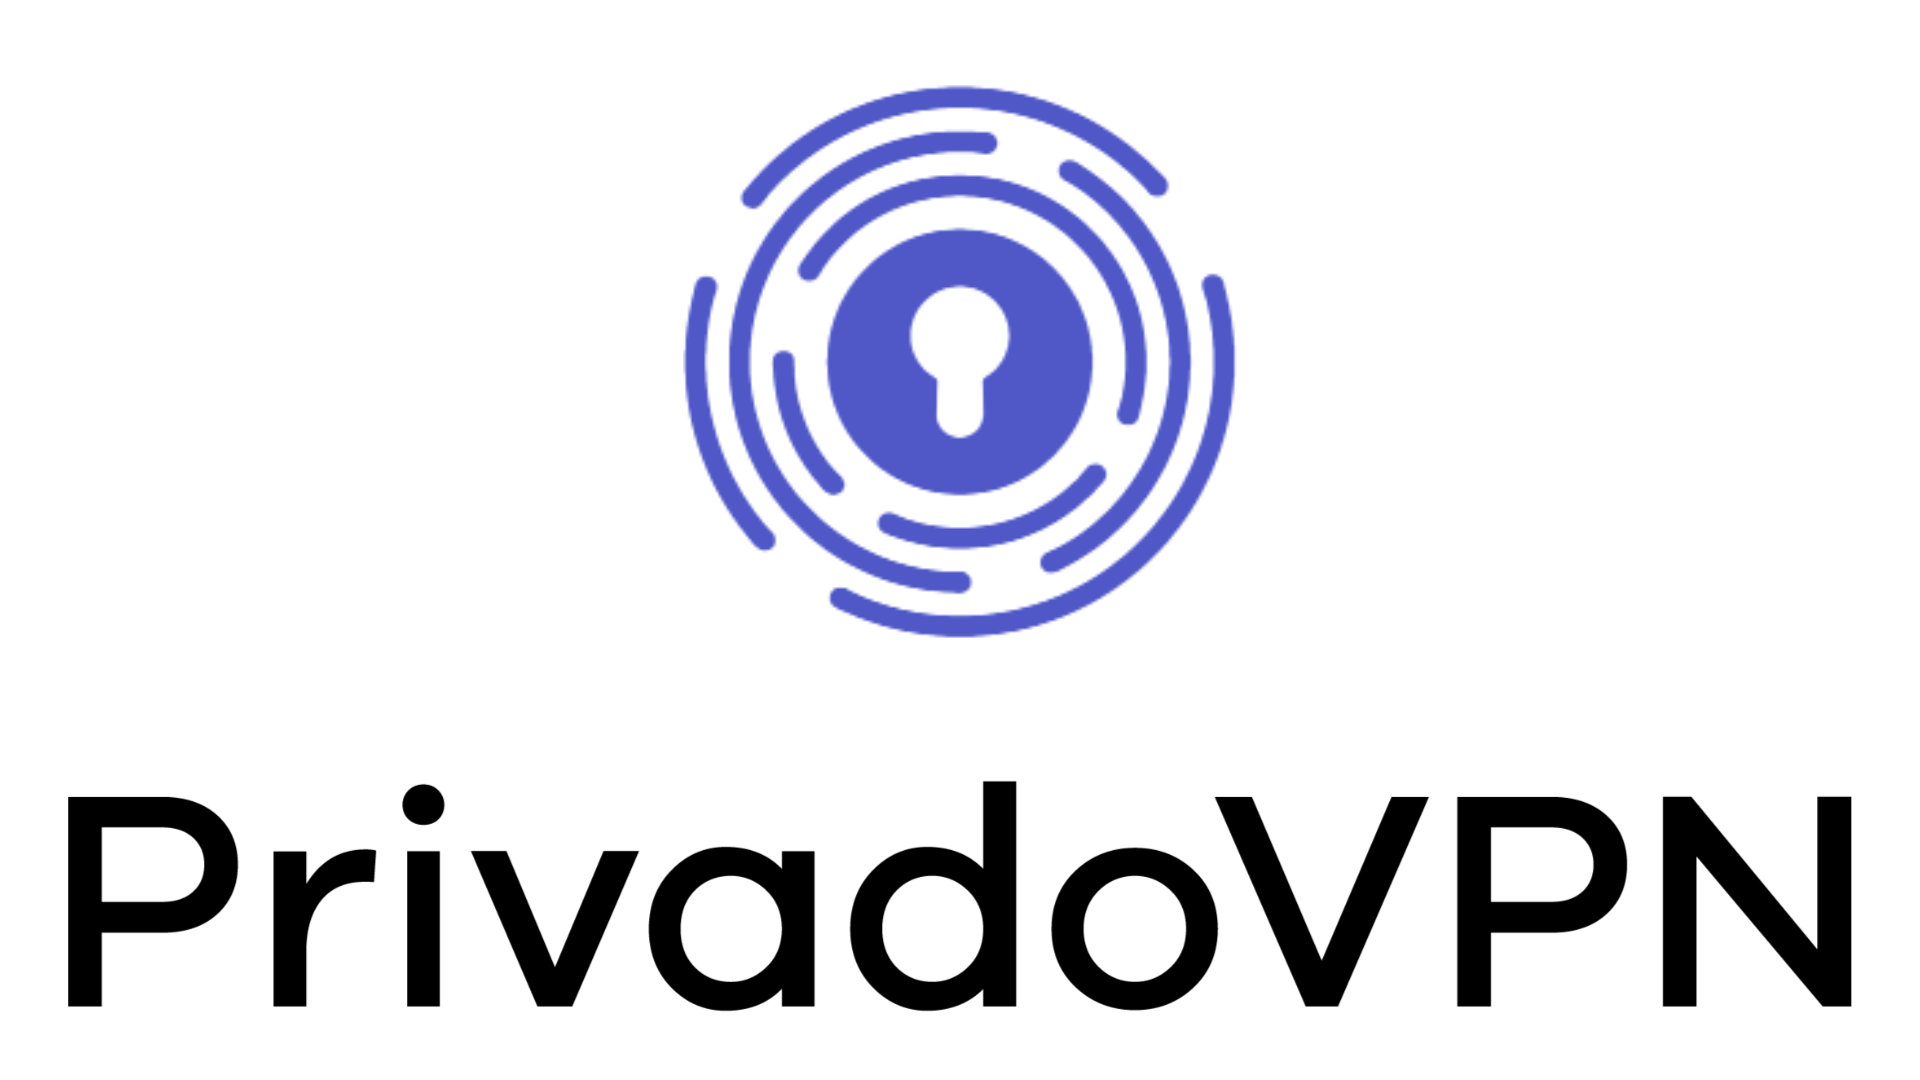 VPN deals: PrivadoVPN. Image shows the company logo.